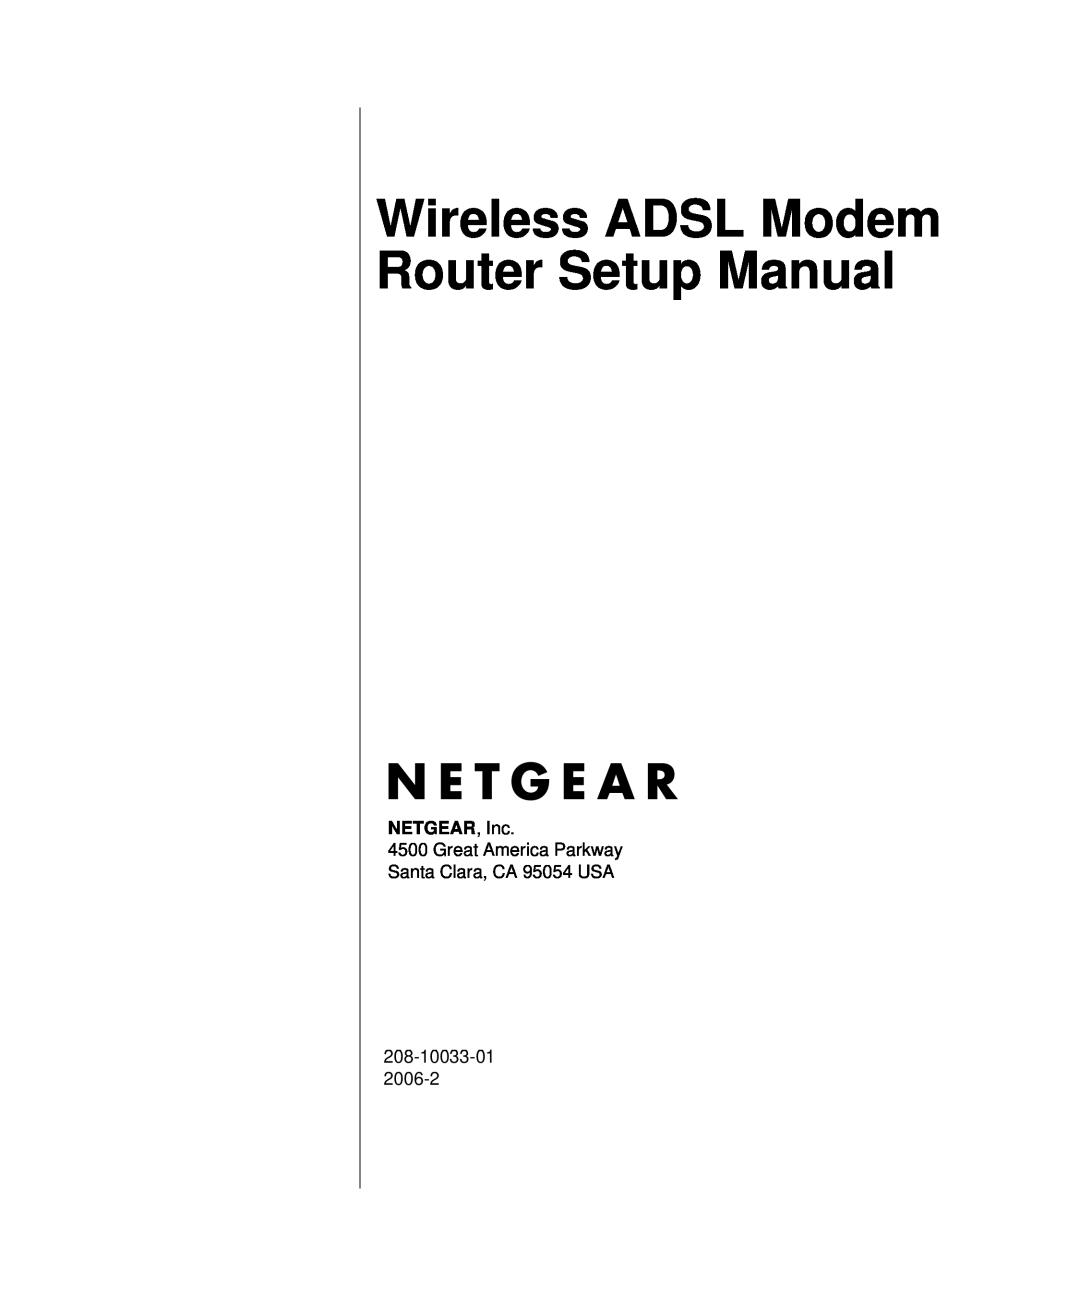 NETGEAR manual Wireless ADSL Modem Router Setup Manual, NETGEAR, Inc 